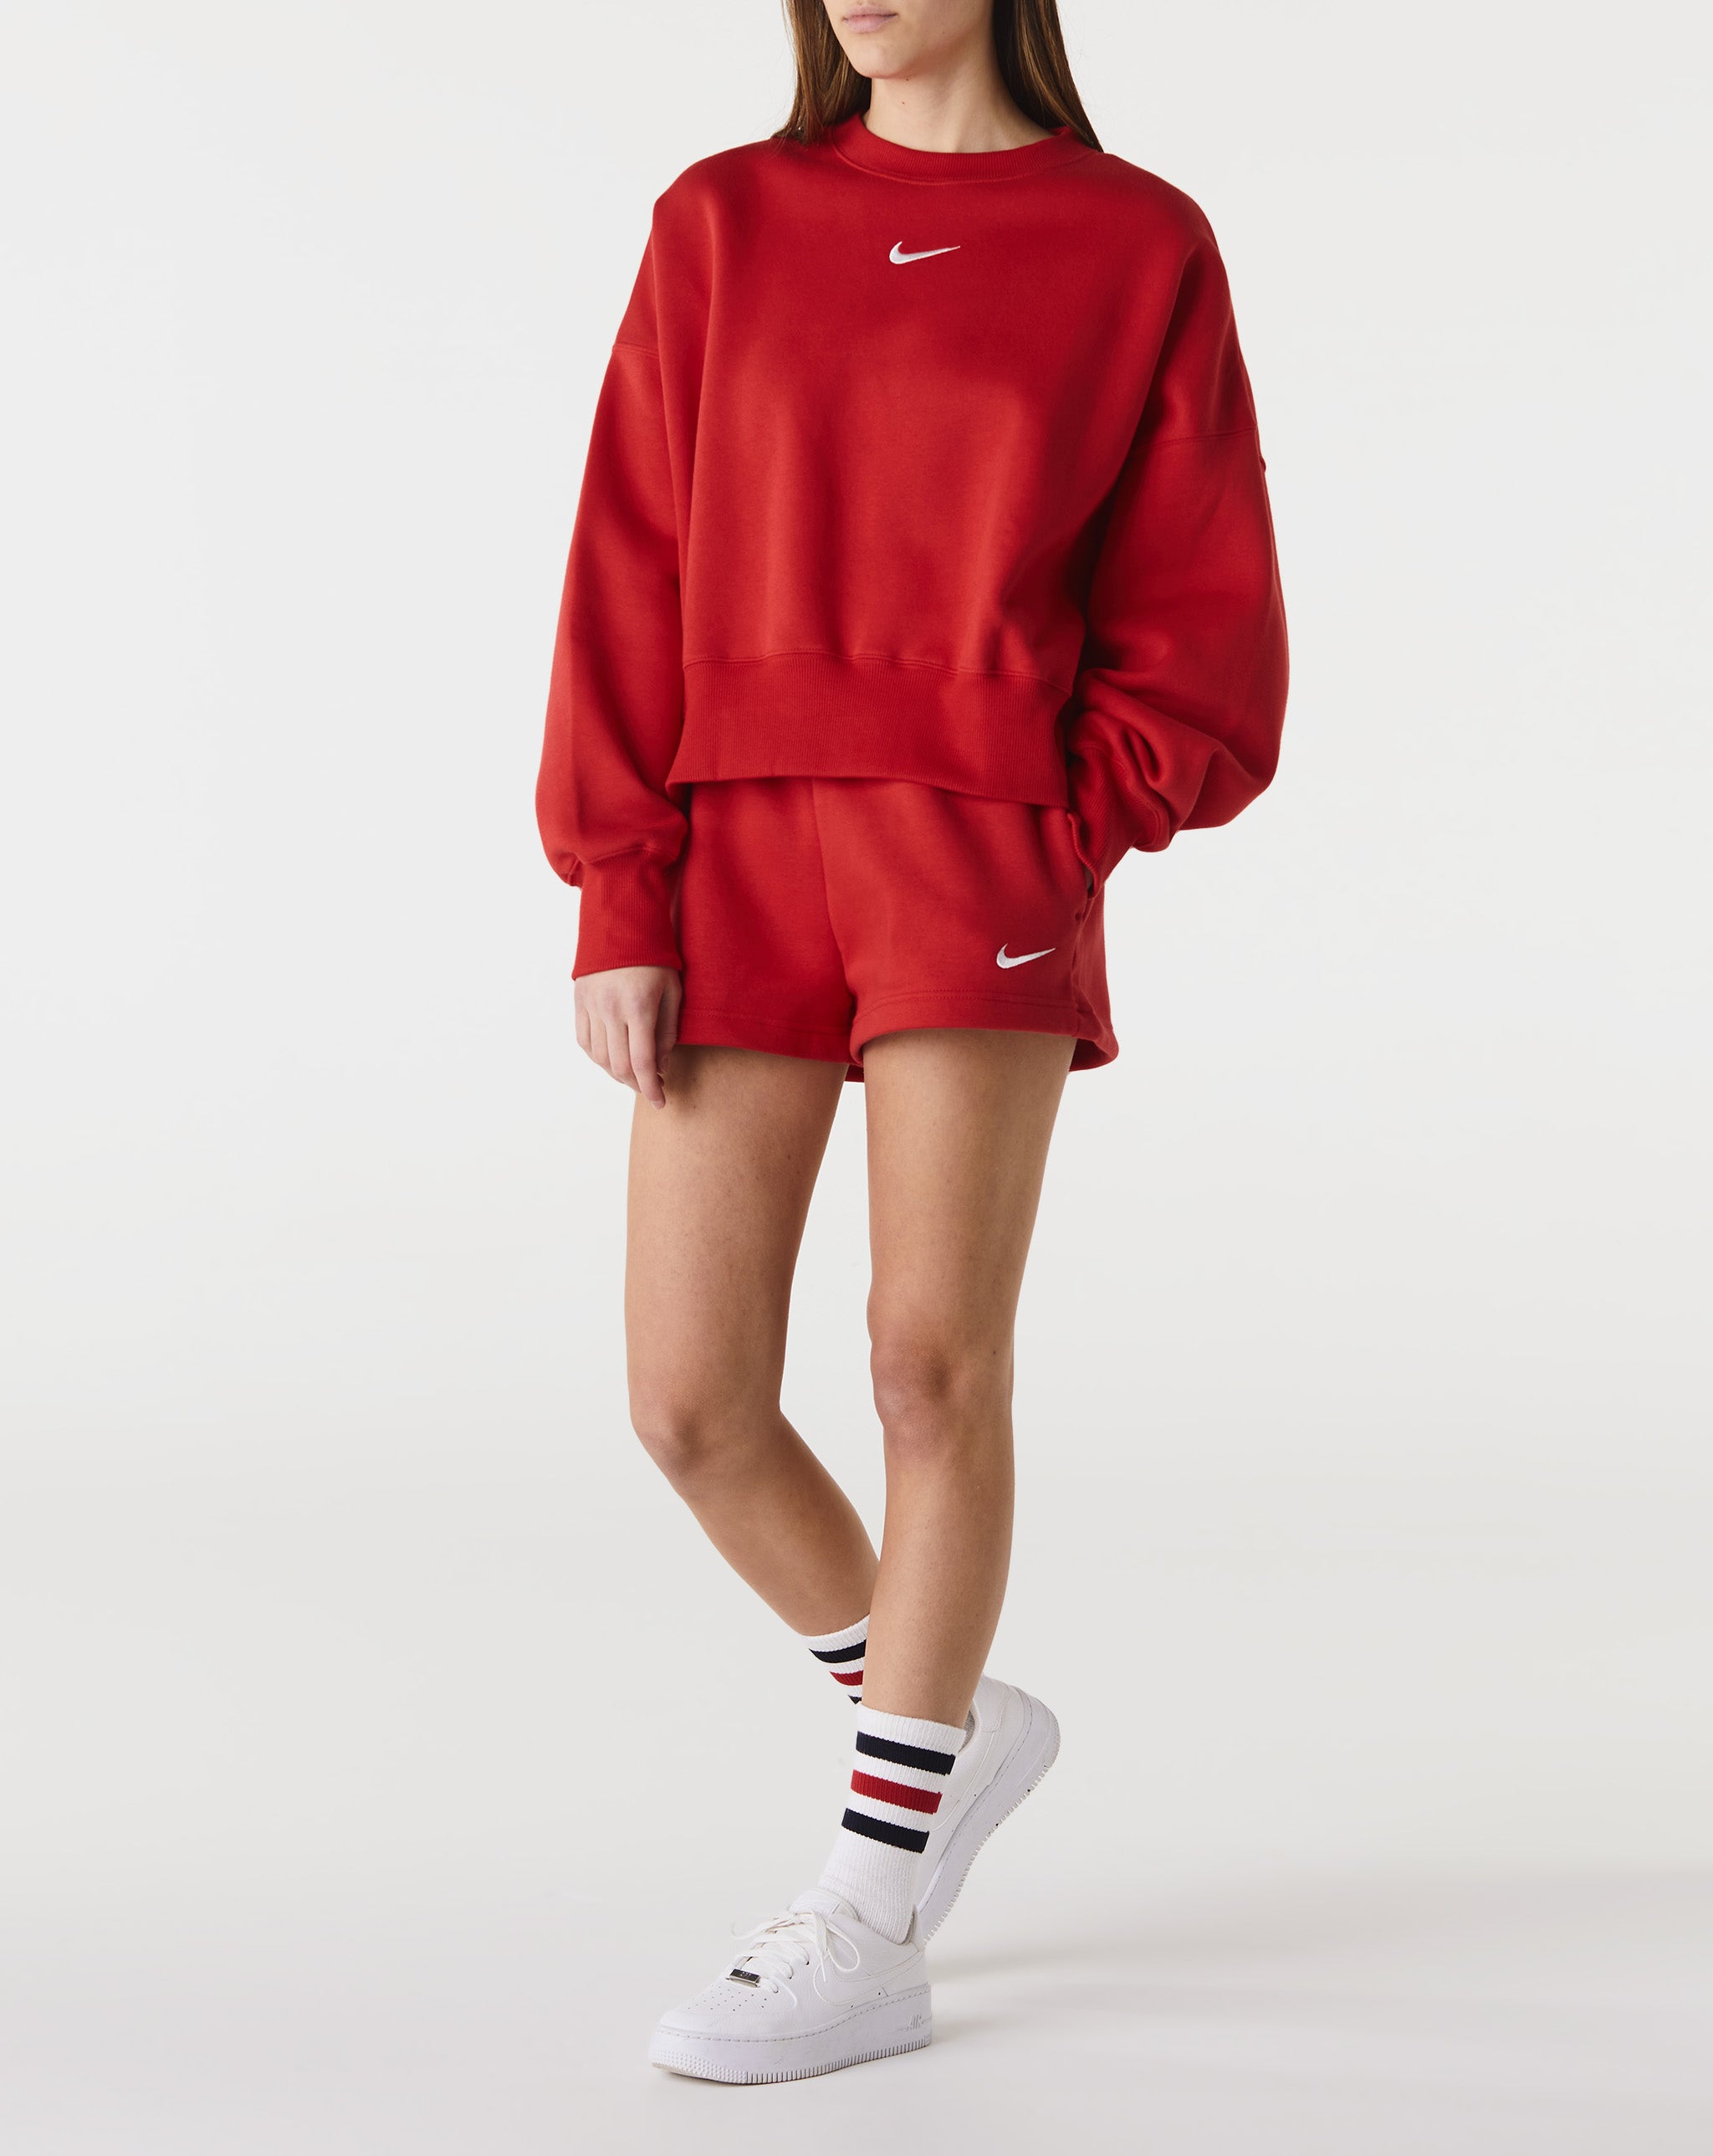 Nike Women's Phoenix Fleece Over-Oversized Crewneck - Rule of Next Apparel